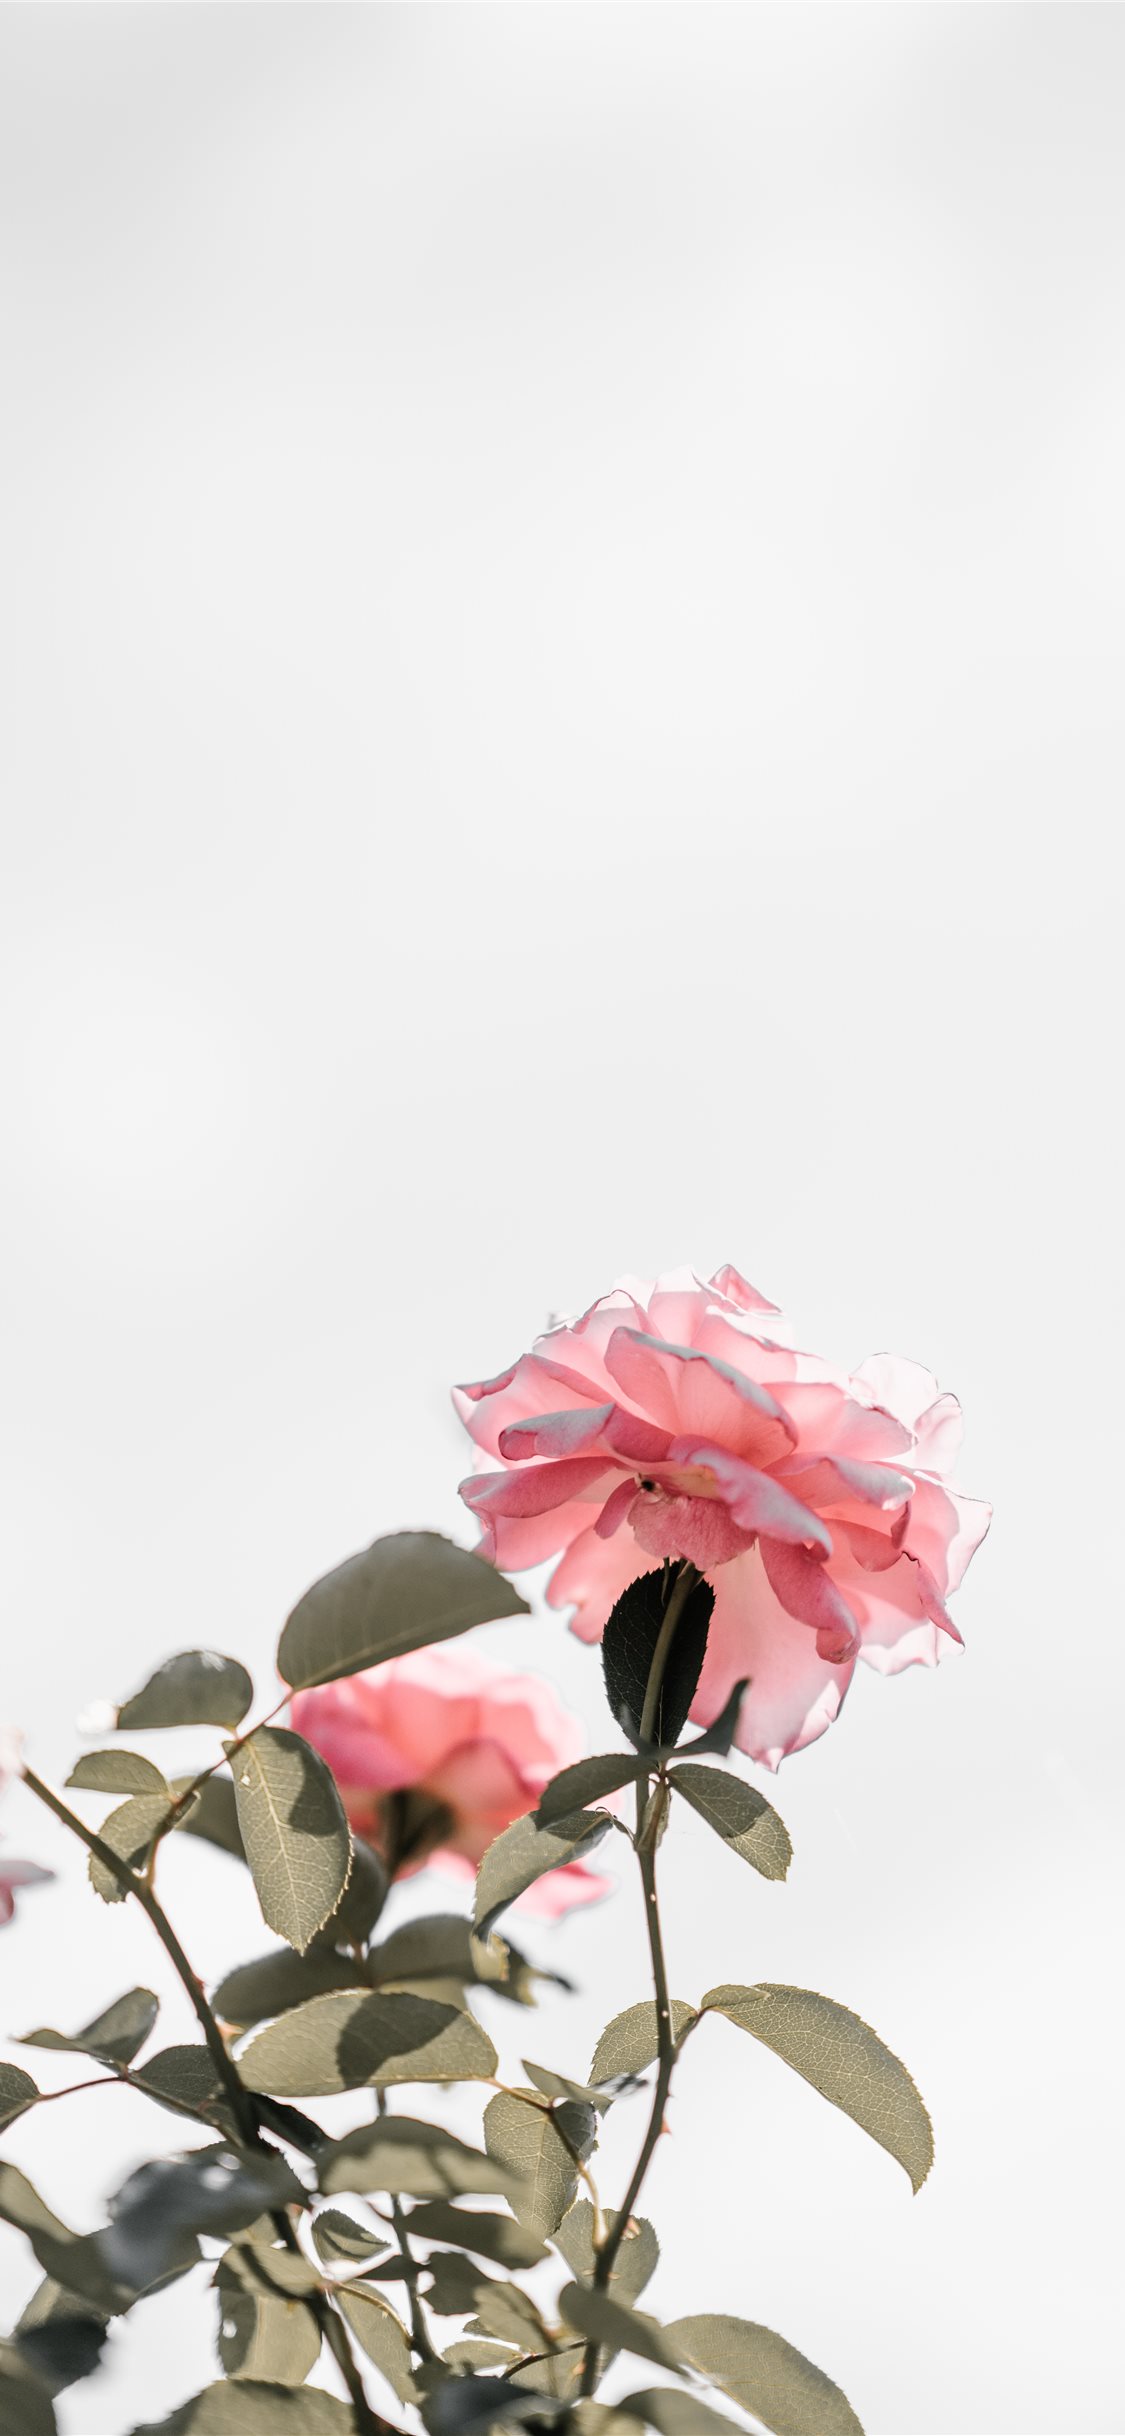 Top 999+ Black Rose Iphone Wallpaper Full HD, 4K✓Free to Use